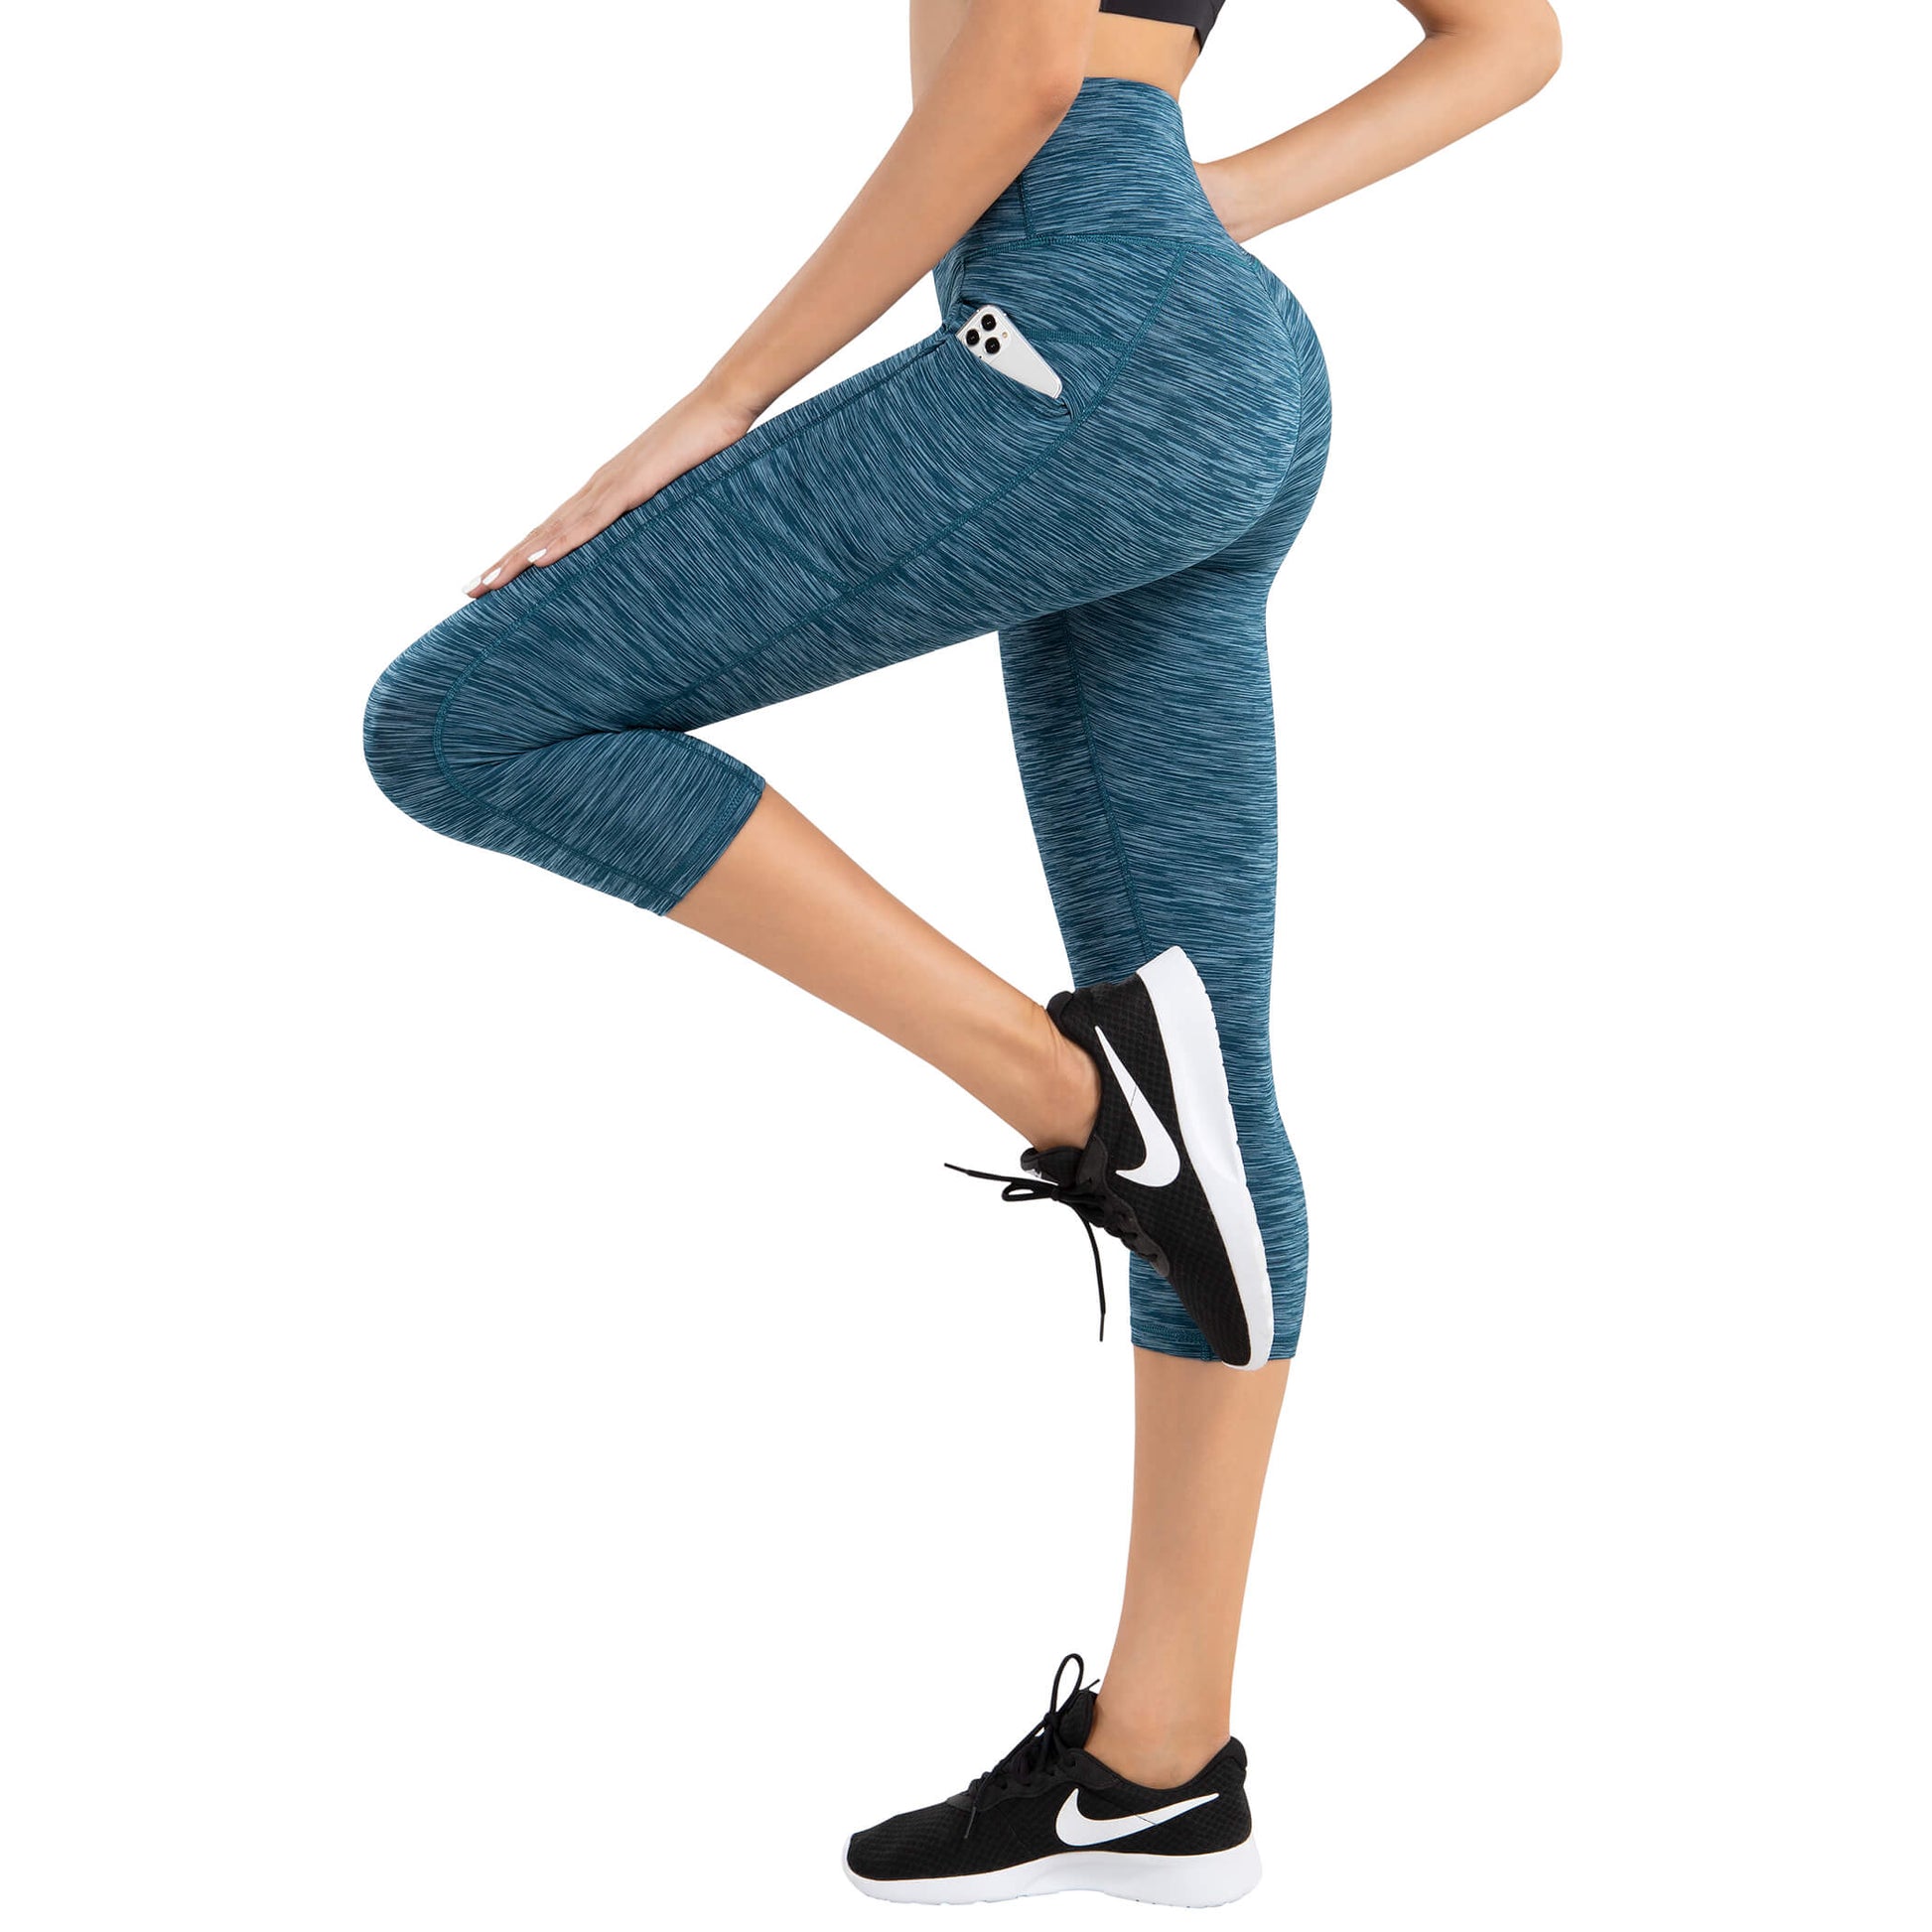 Buy LifeSky High Waist Yoga Pants Workout Leggings for Women with